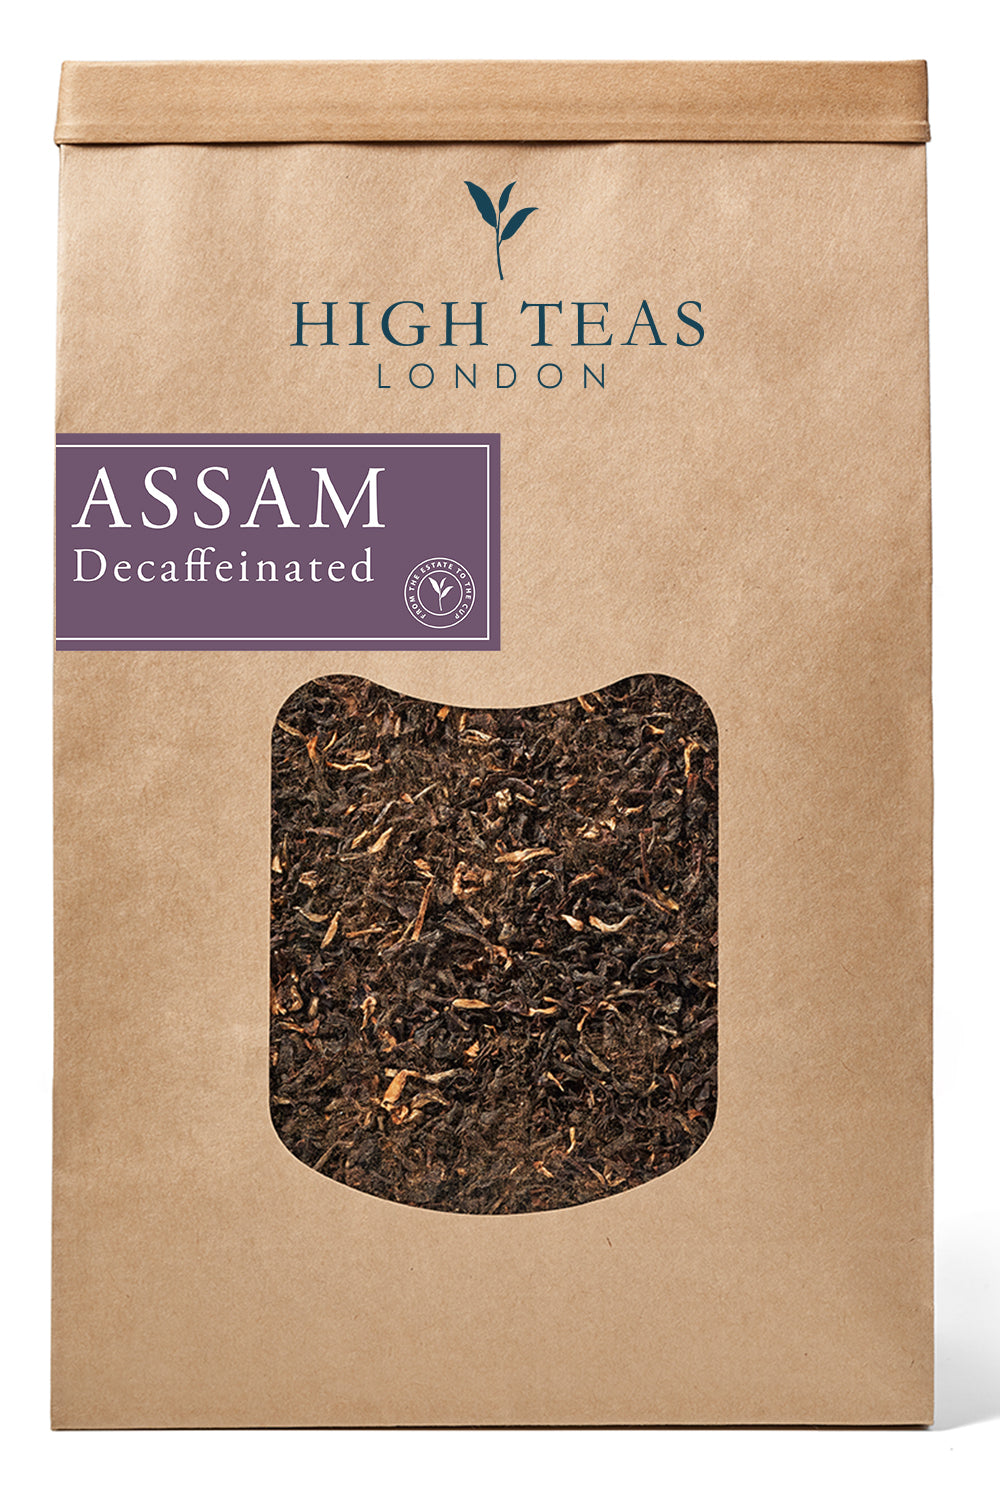 Assam Decaffeinated-500g-Loose Leaf Tea-High Teas